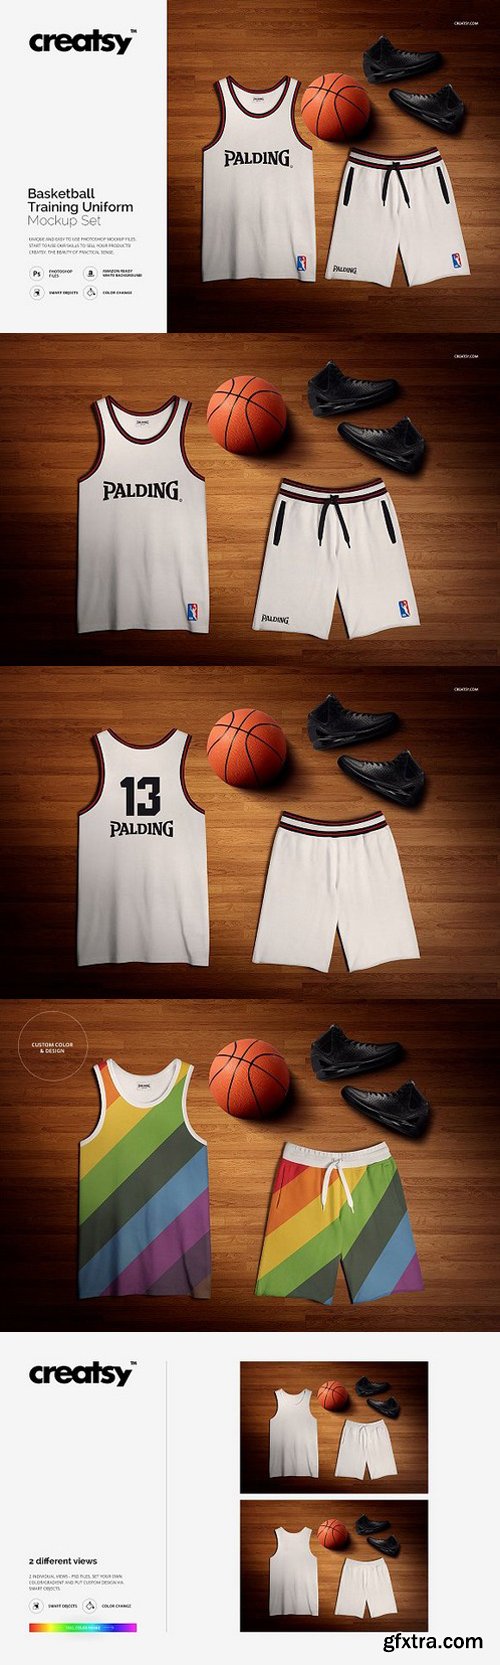 CM - Basketball Training Uniform Mockup 1531089